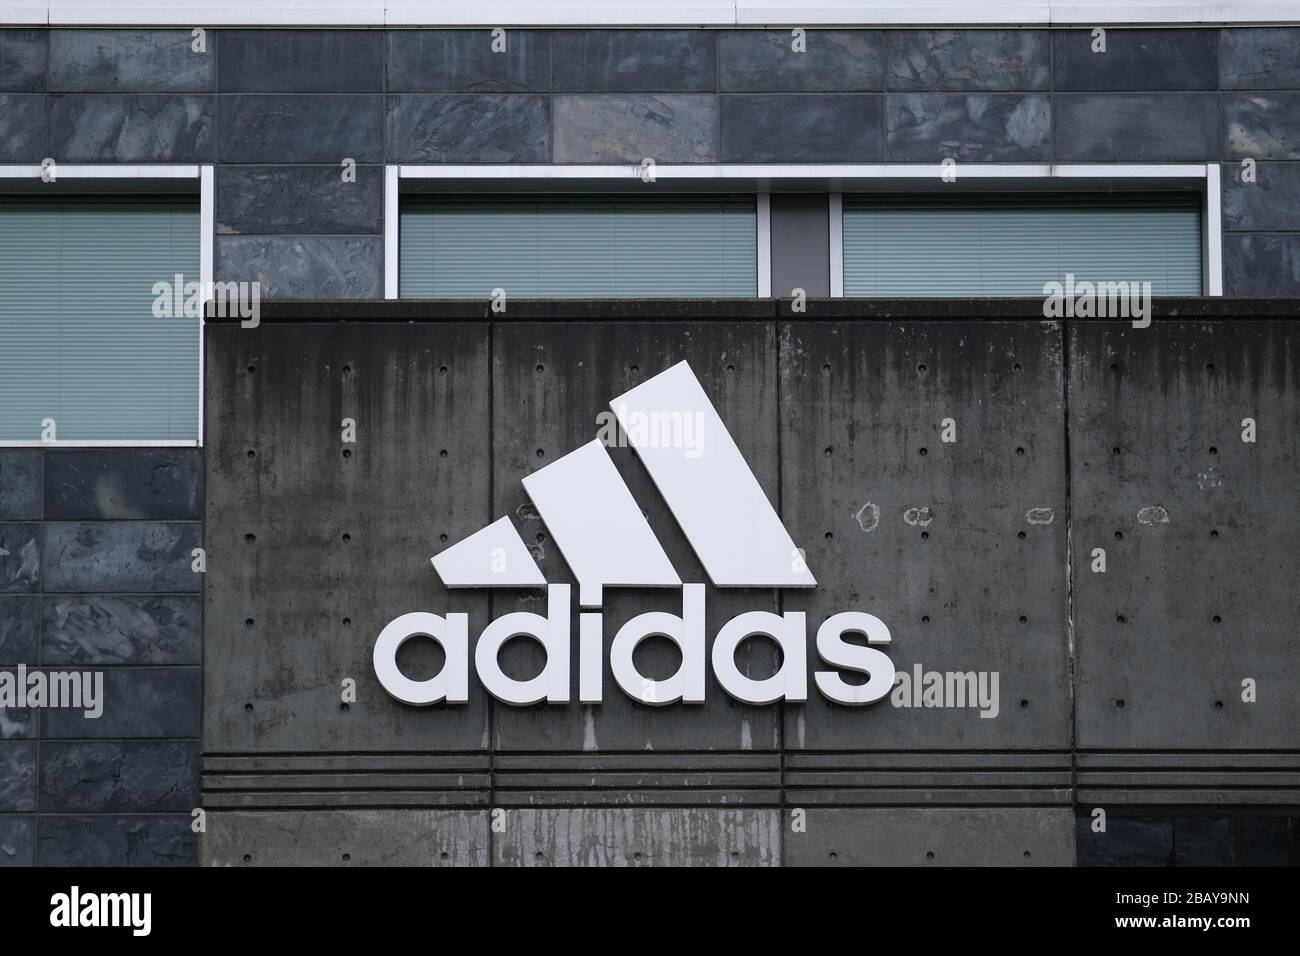 is adidas an american company